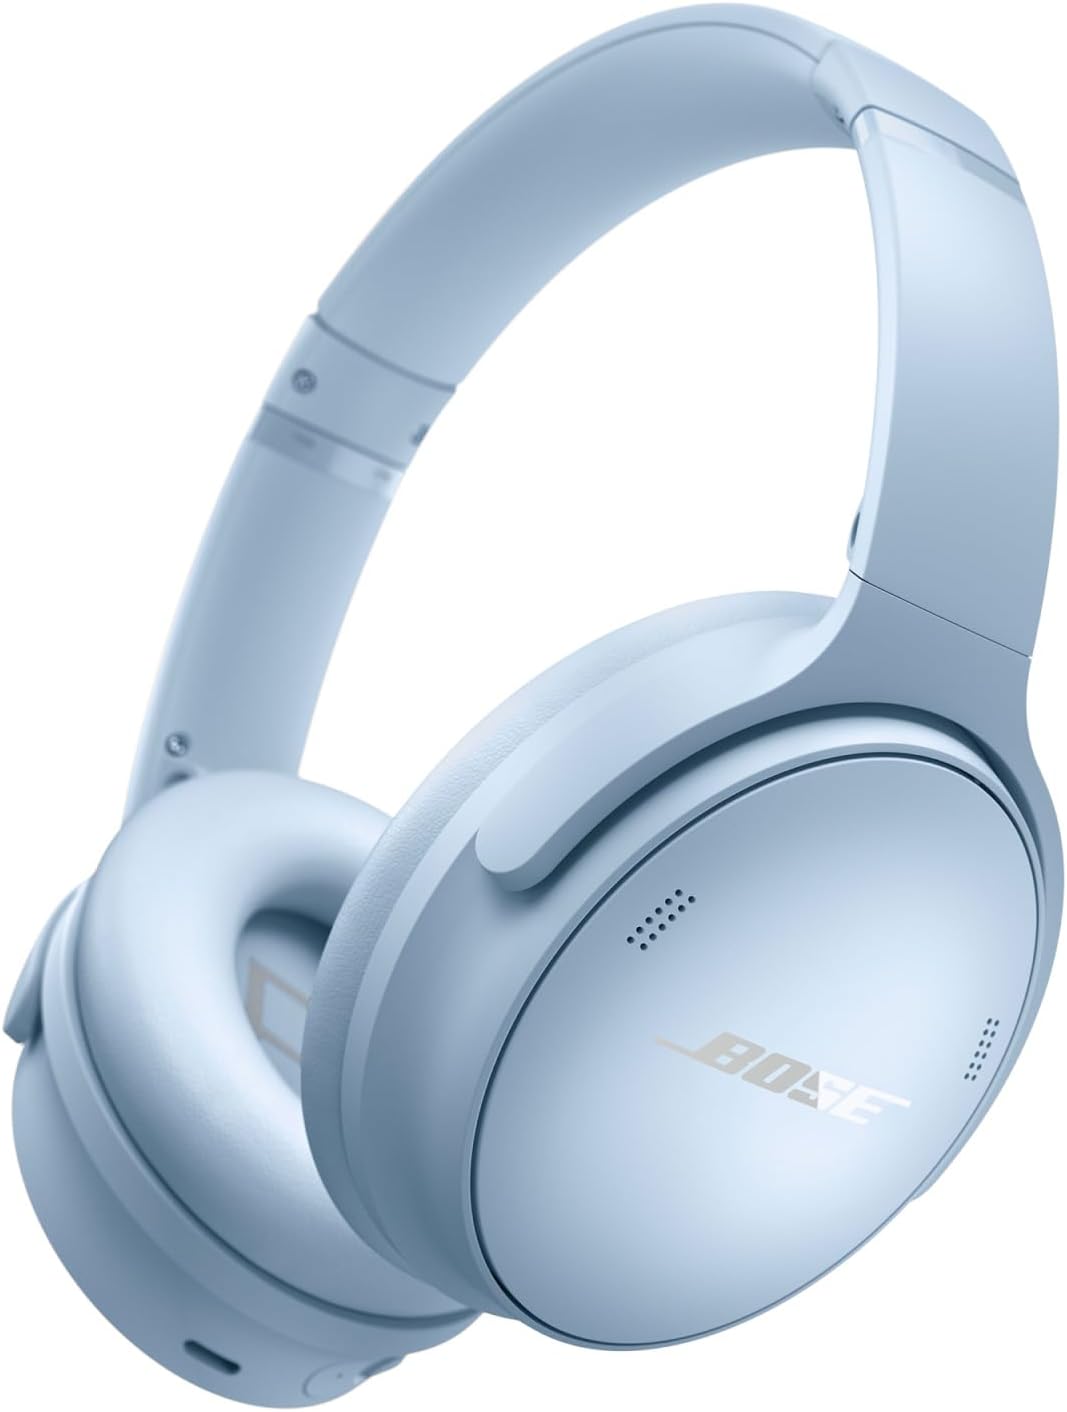 QuietComfort Wireless Noise Cancelling Headphones - $249.00